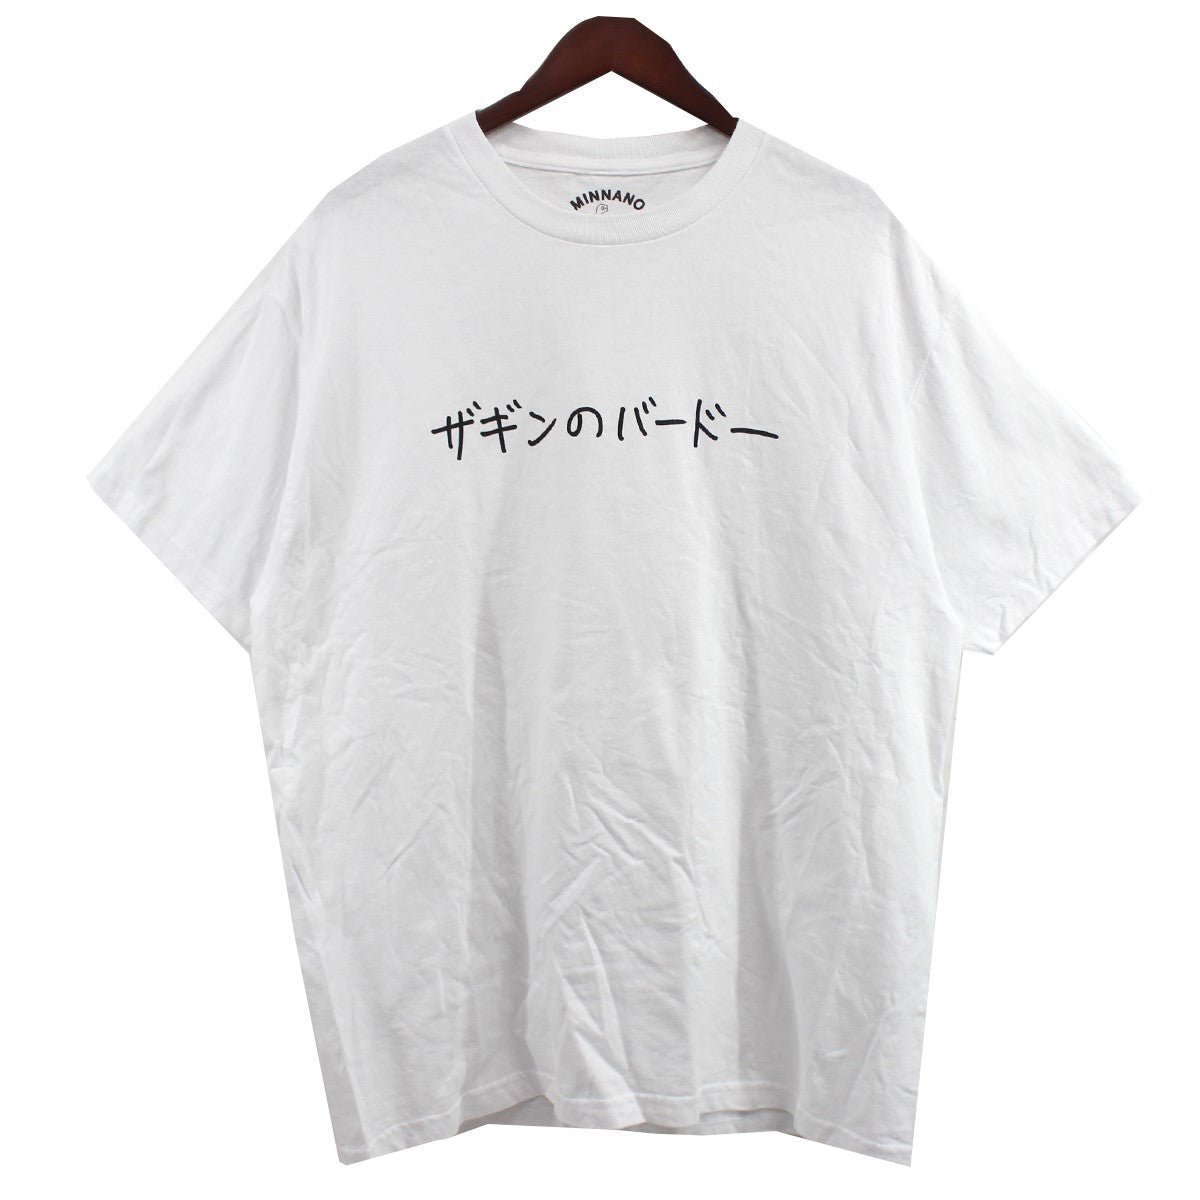 MIN-NANO(ミンナノ) 22SS DOVER STREET MARKET GINZA 限定 ロゴ Tシャツ